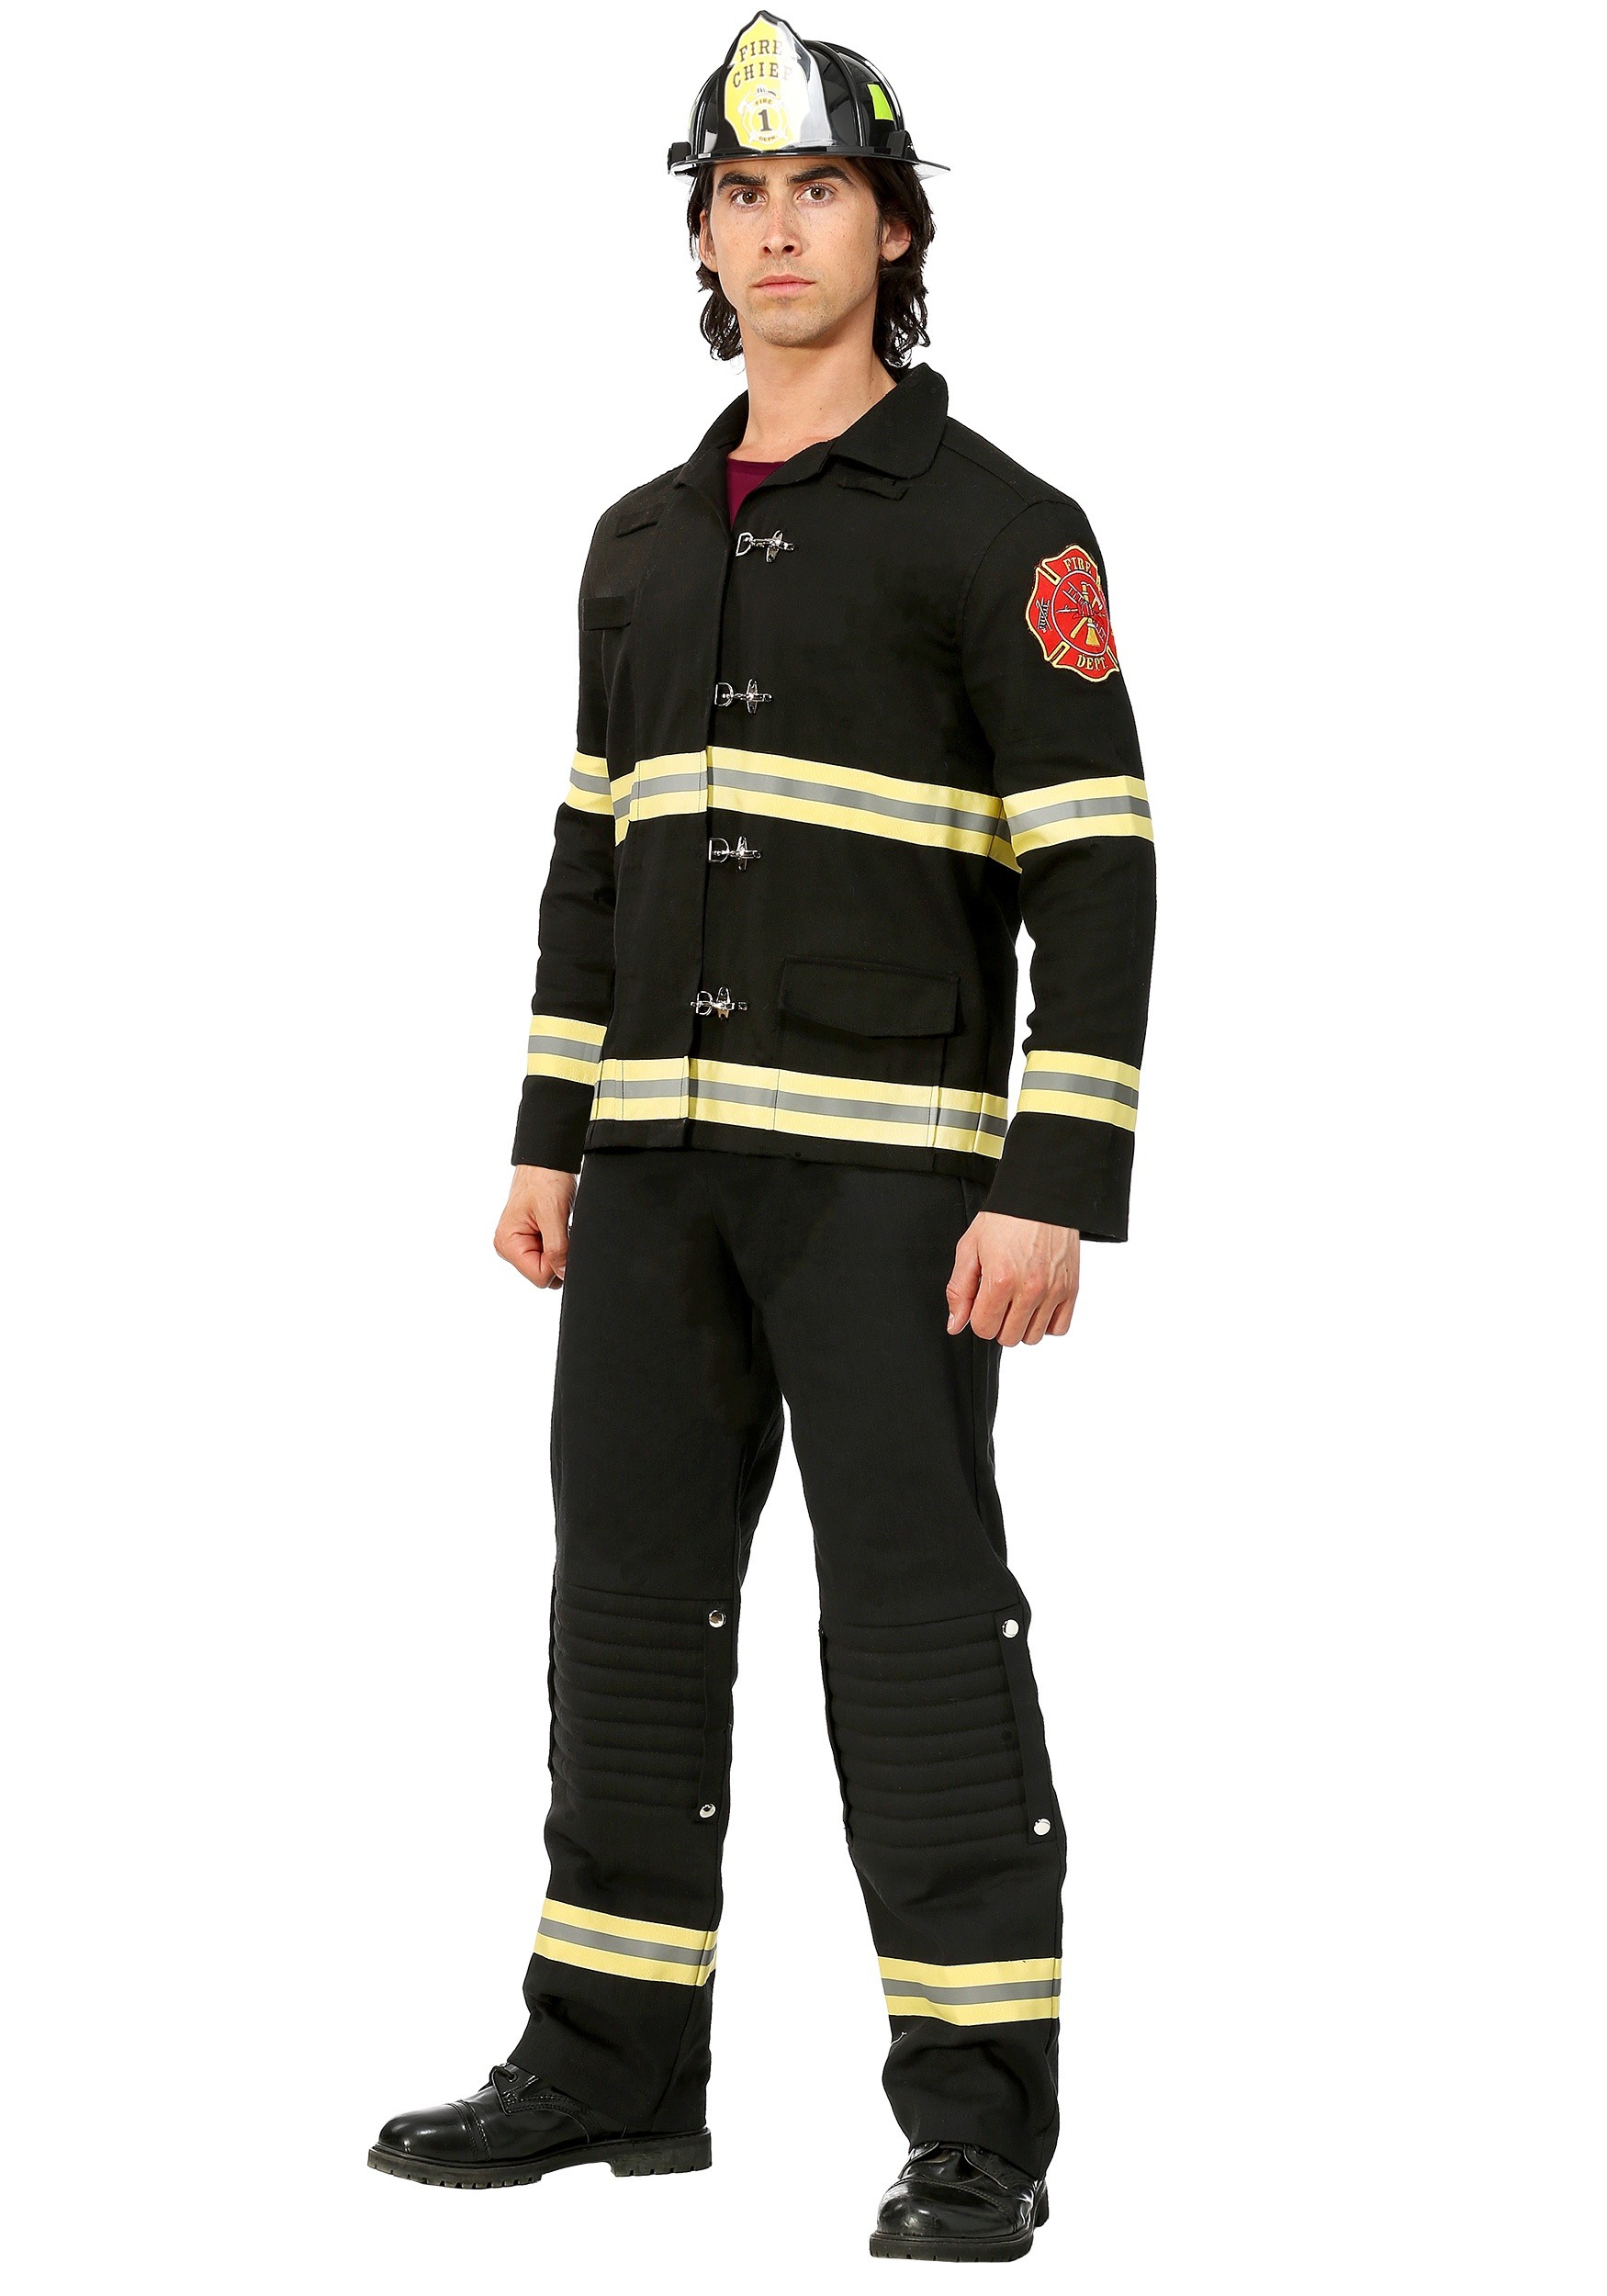 Photos - Fancy Dress FUN Costumes Black Uniform Firefighter Adult Costume Black/Yellow FUN6